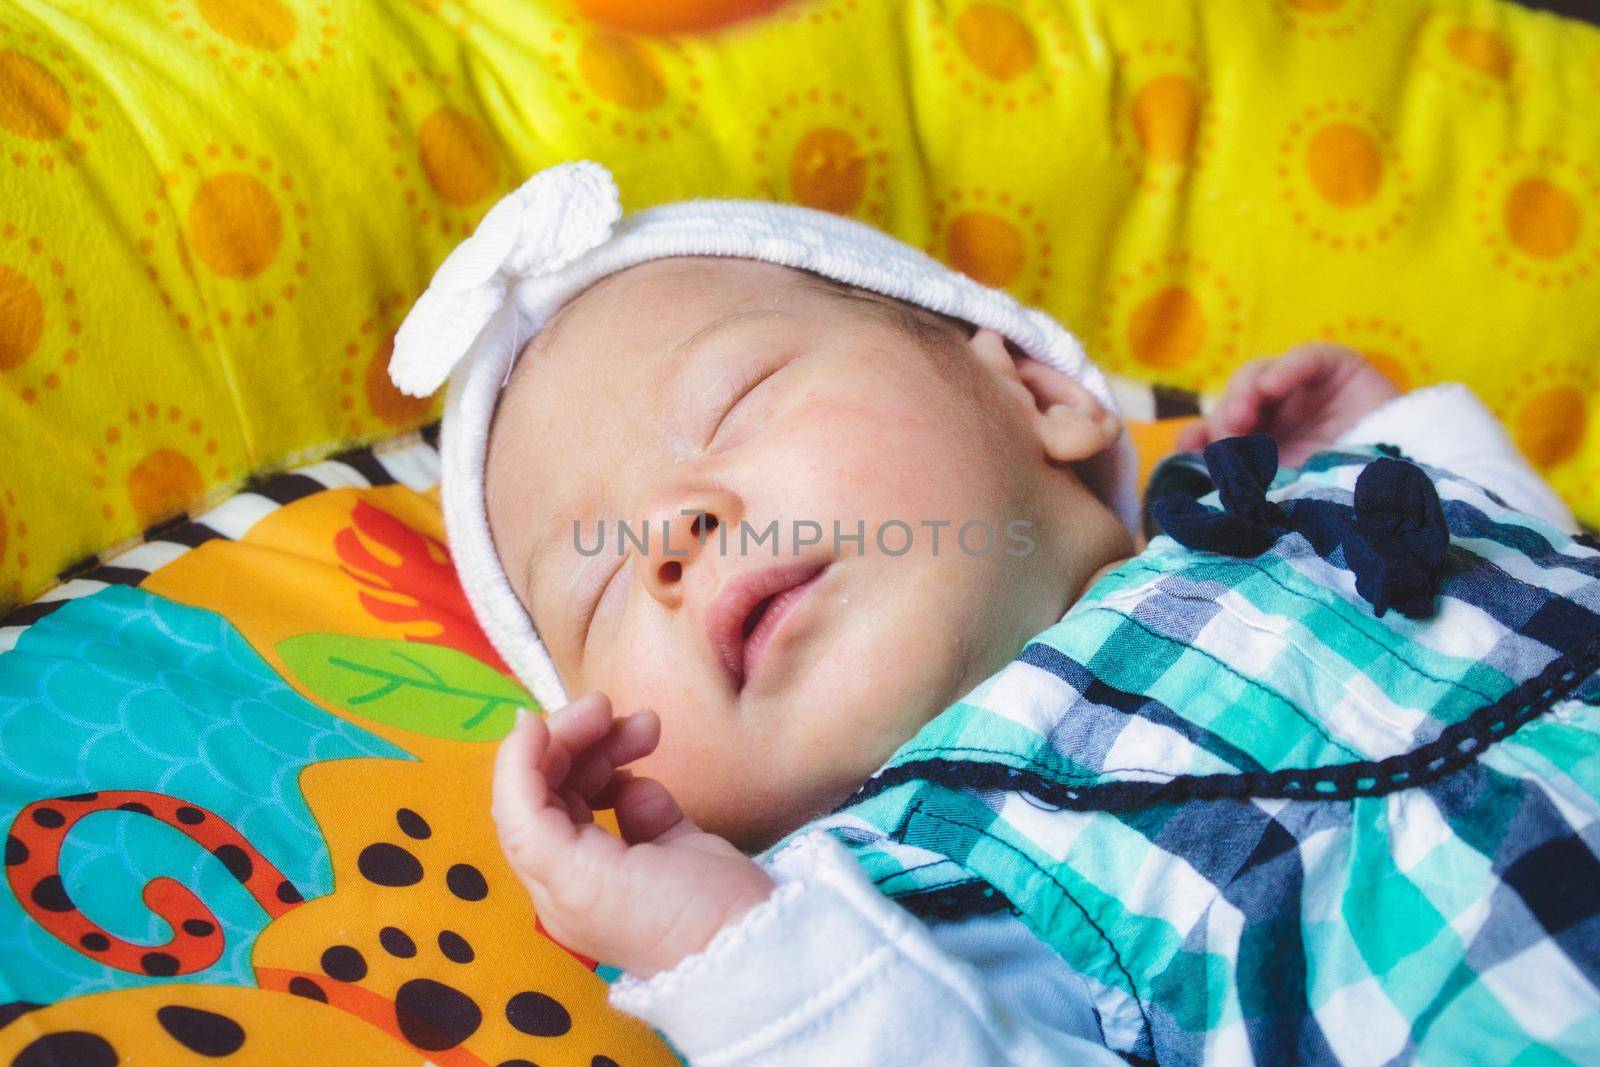 An adorable cute newborn baby girl wearing a white headband fast asleep on a play blanket